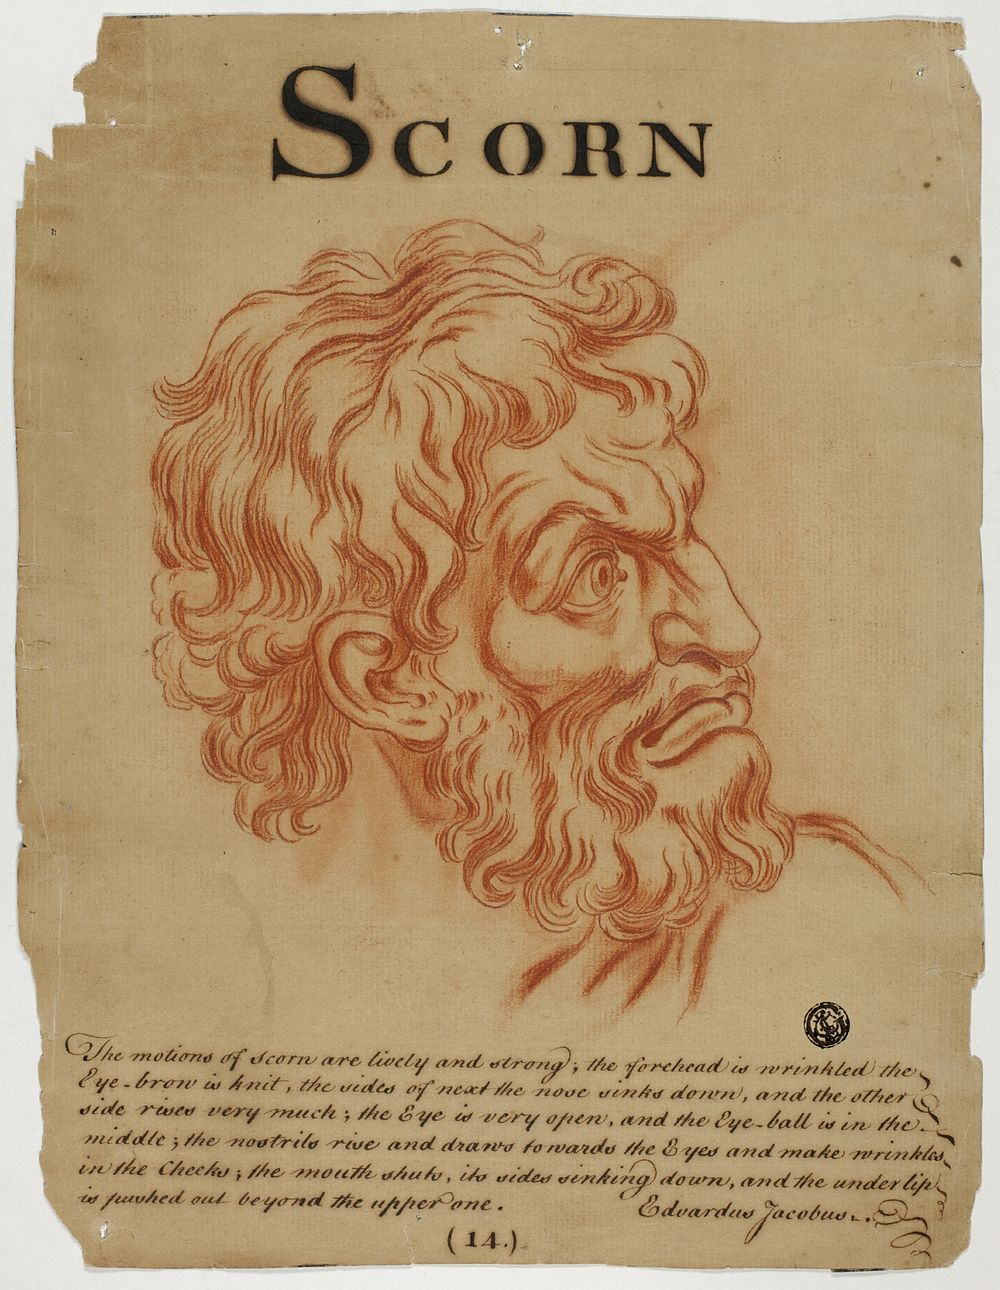 Scorn by Eduardus Jacobus